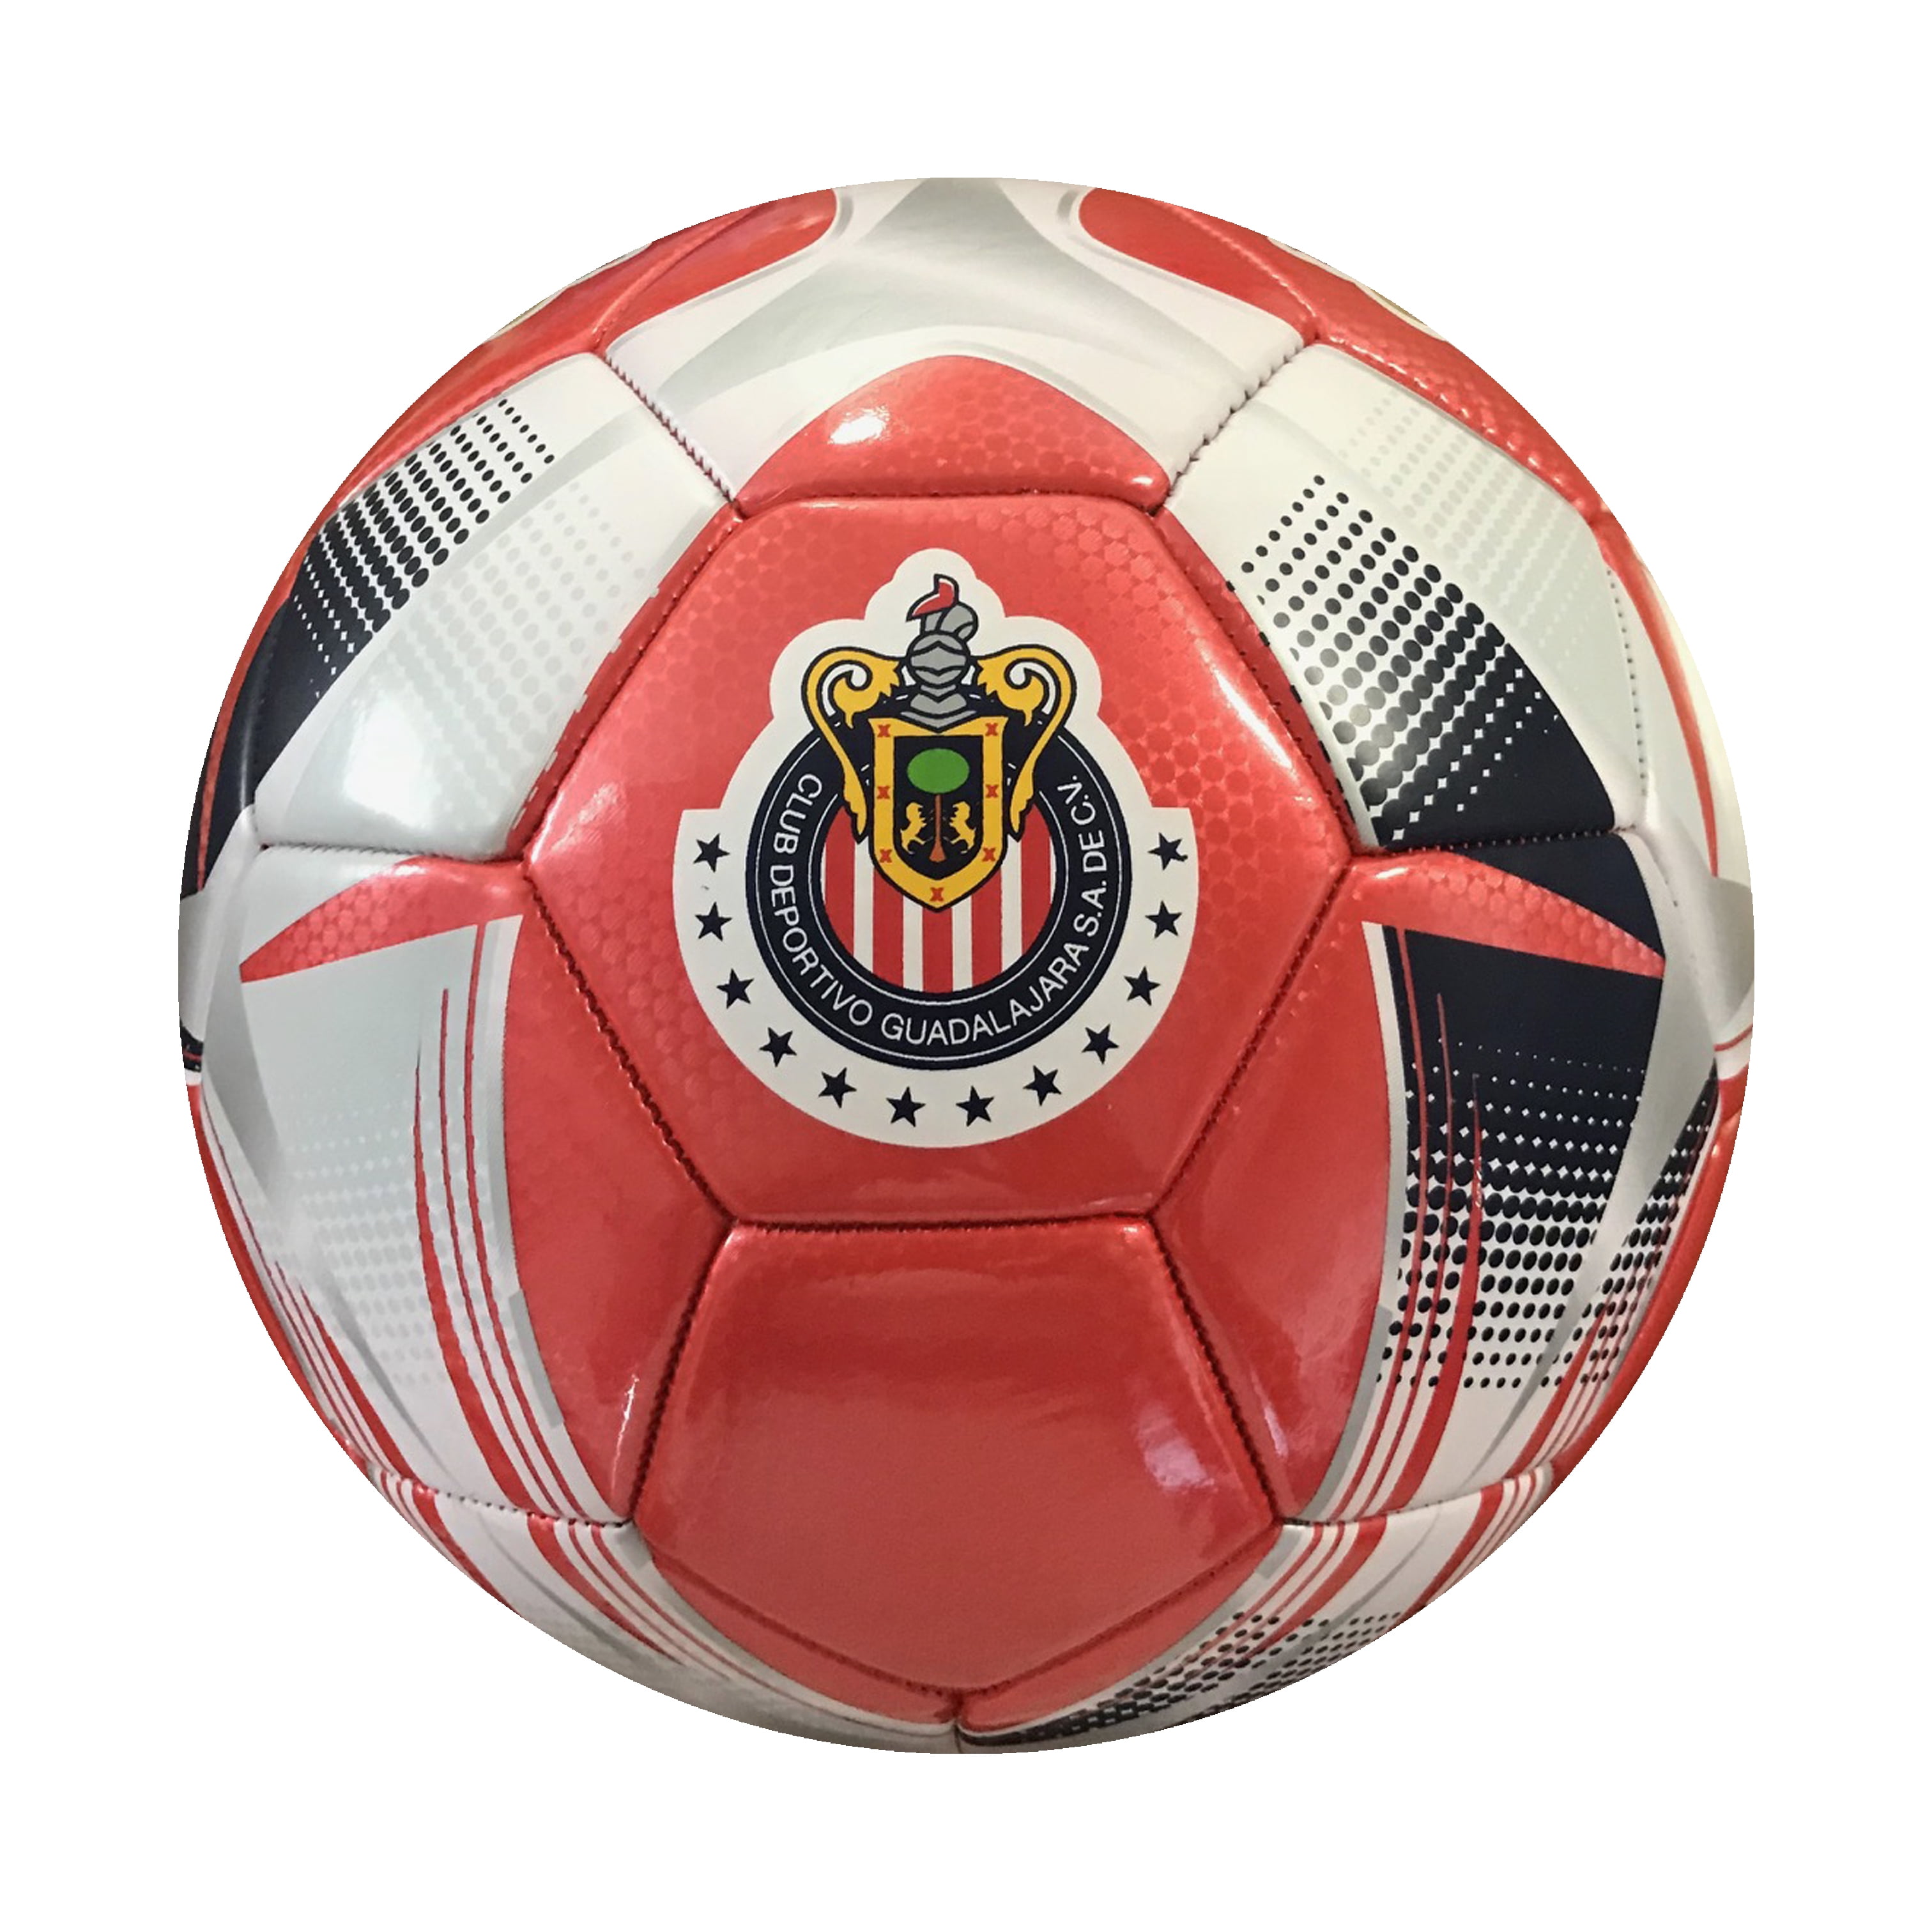 RHINOXGROUP Chivas De Guadalajara Authentic Official Licensed Soccer Ball Size 5-001 